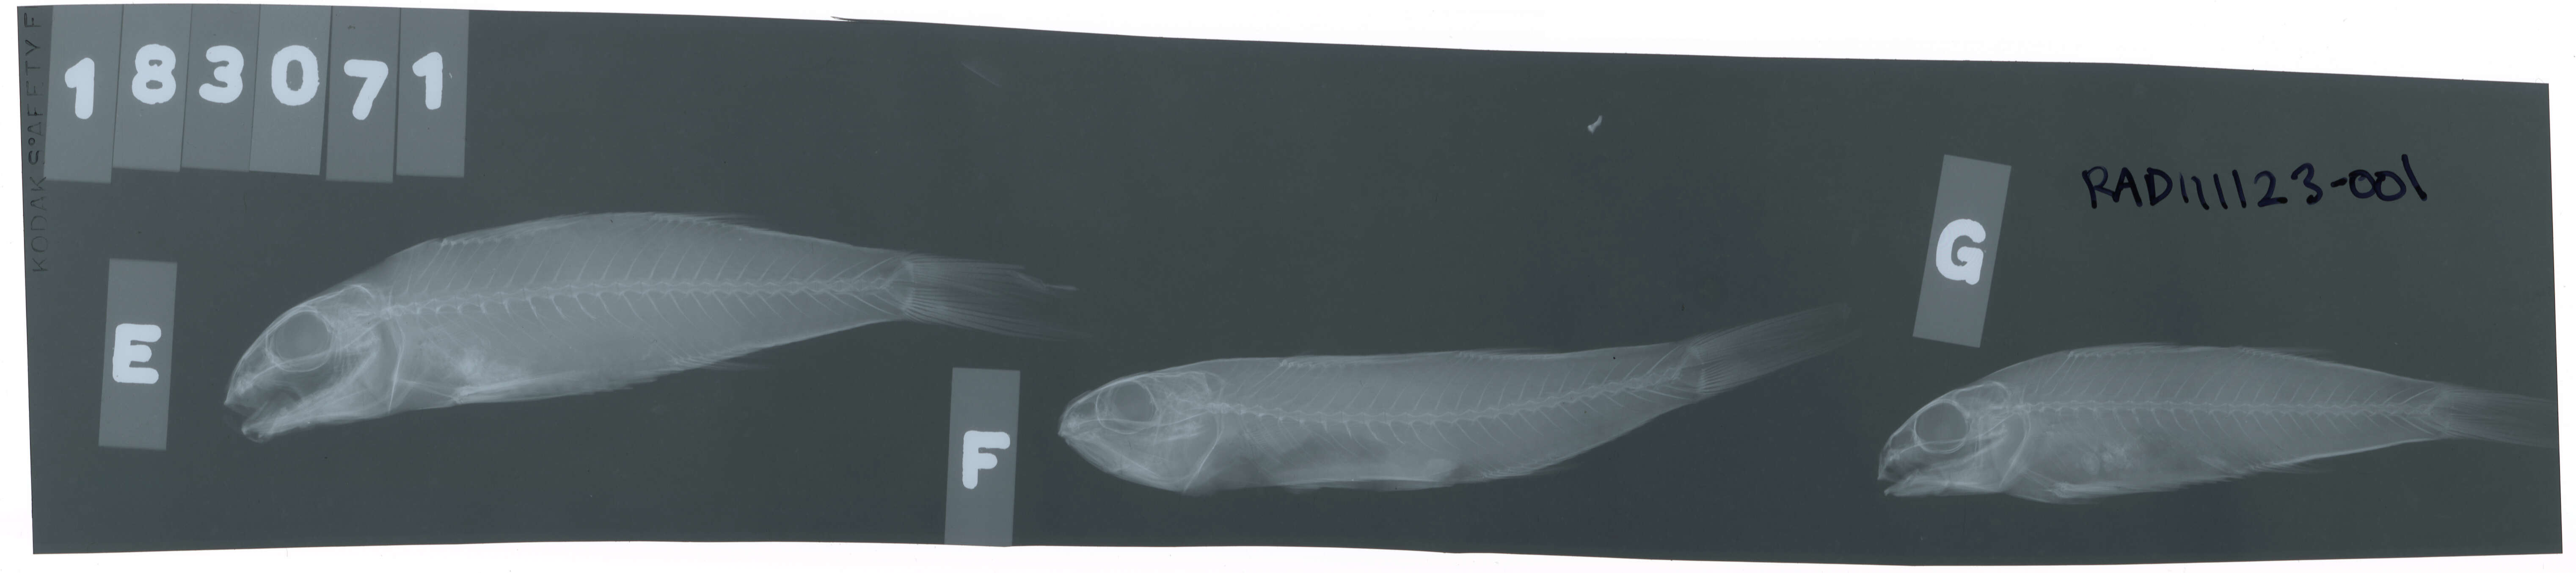 Image of Dark-barred goatfish